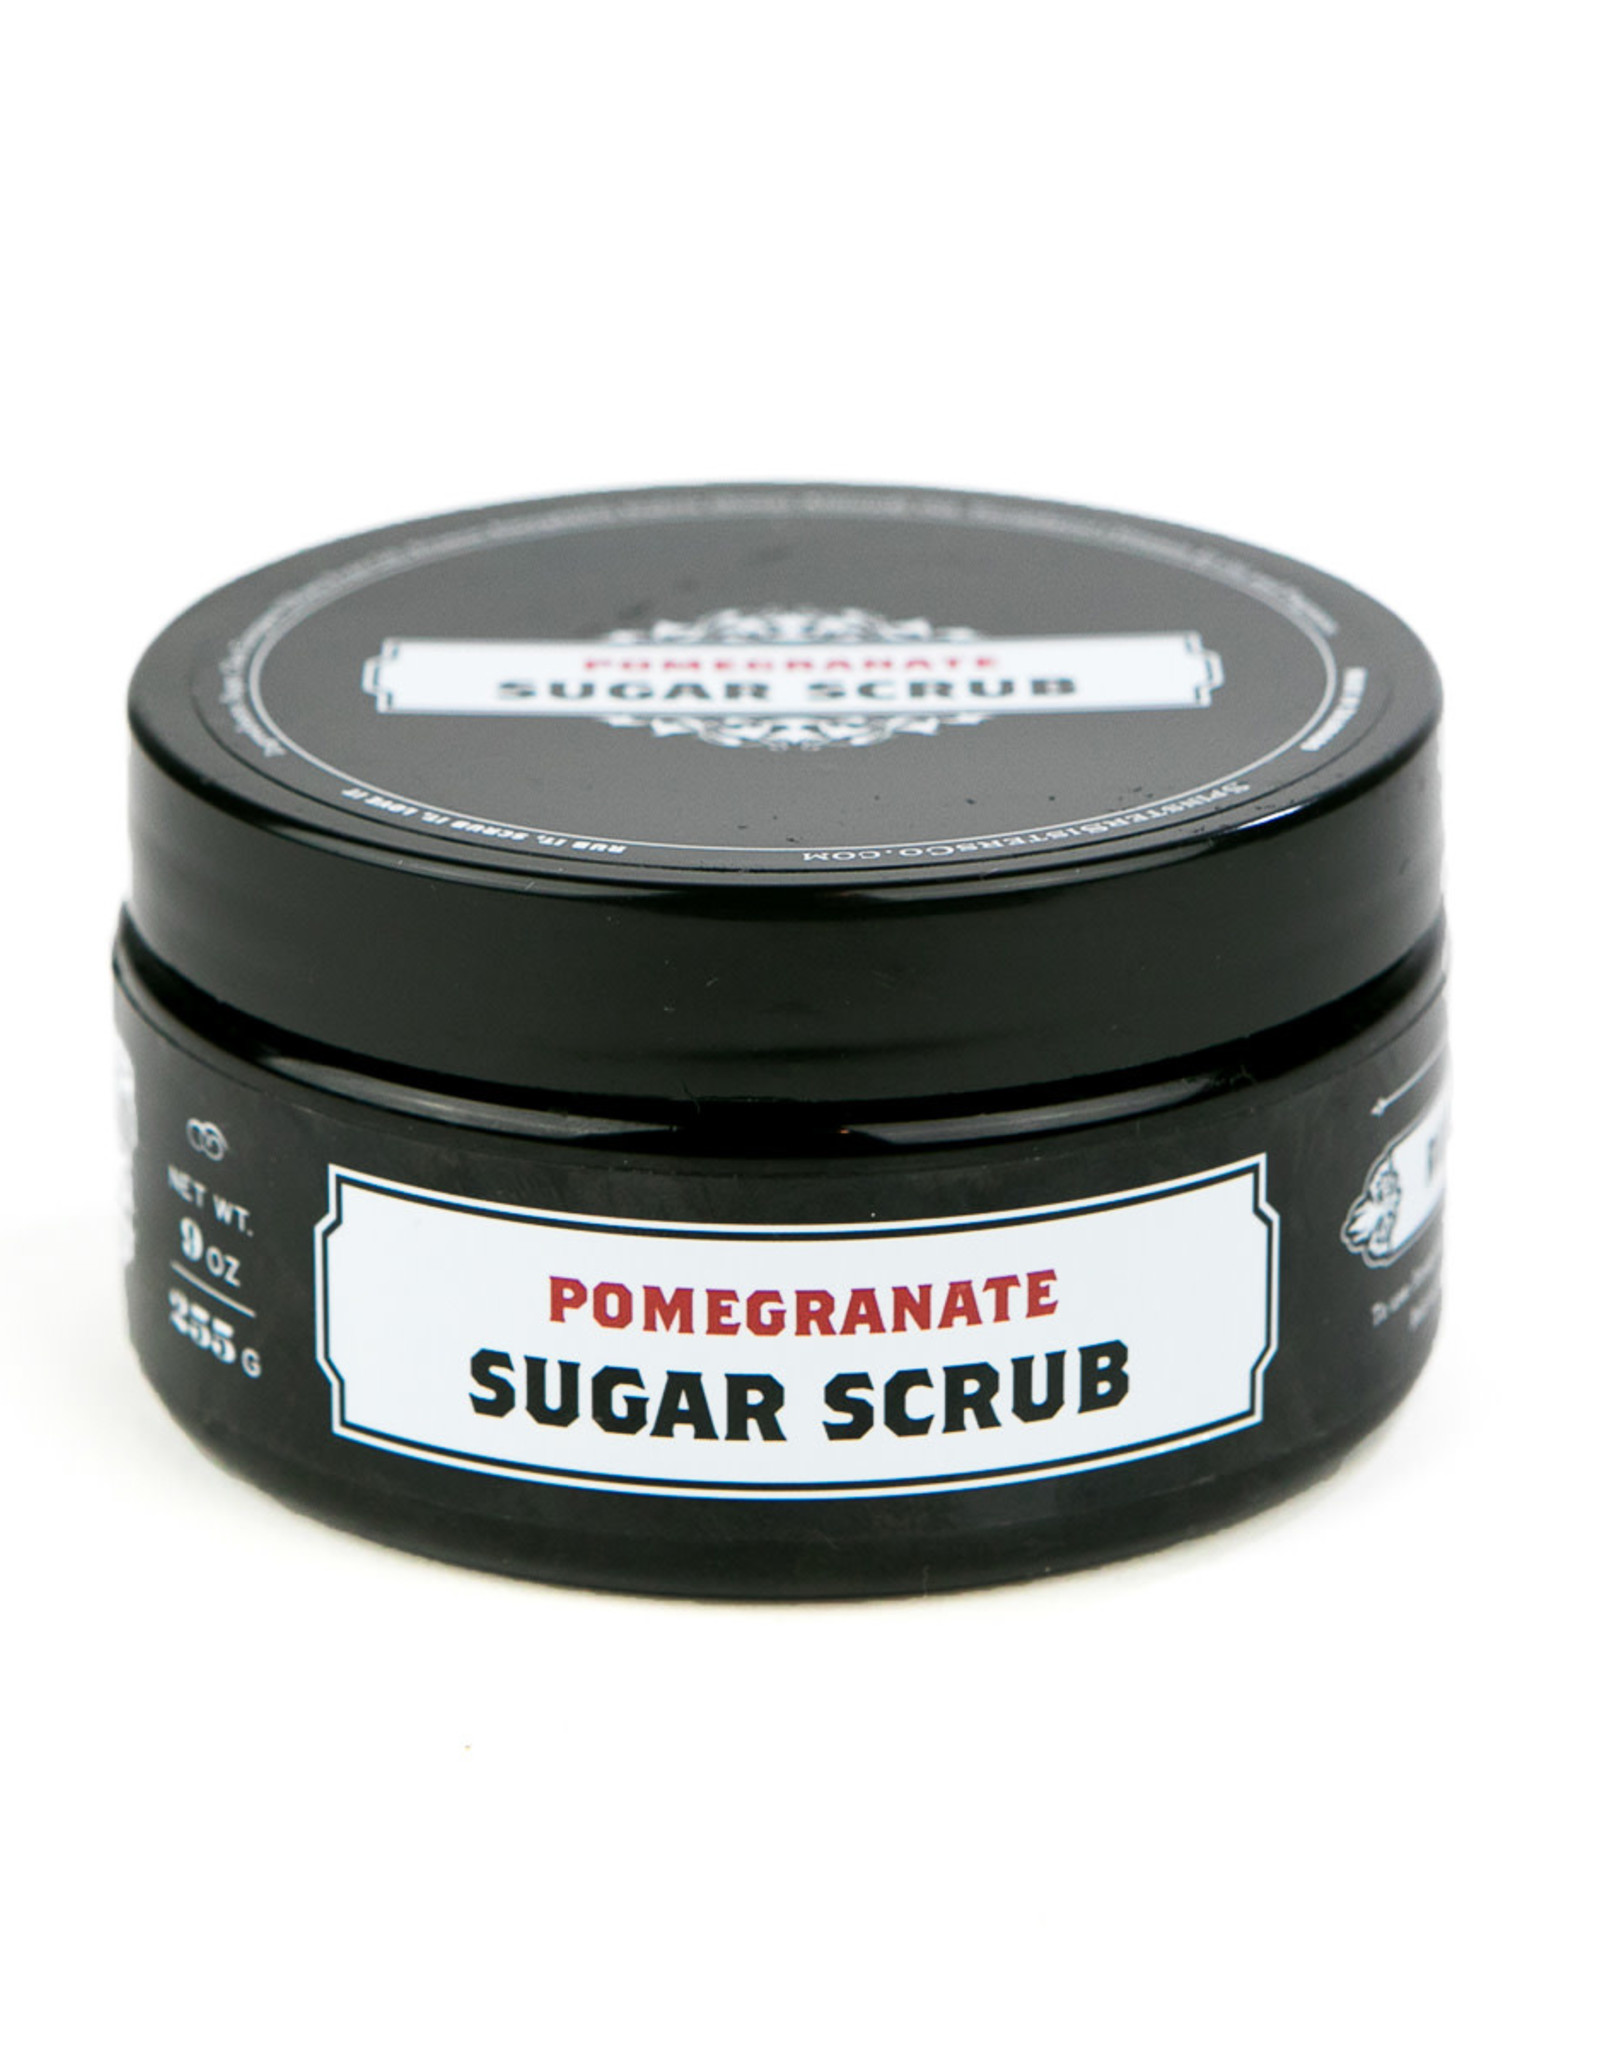 Spinster Sisters Co. Sugar Scrub 9 oz. | Pomegranate